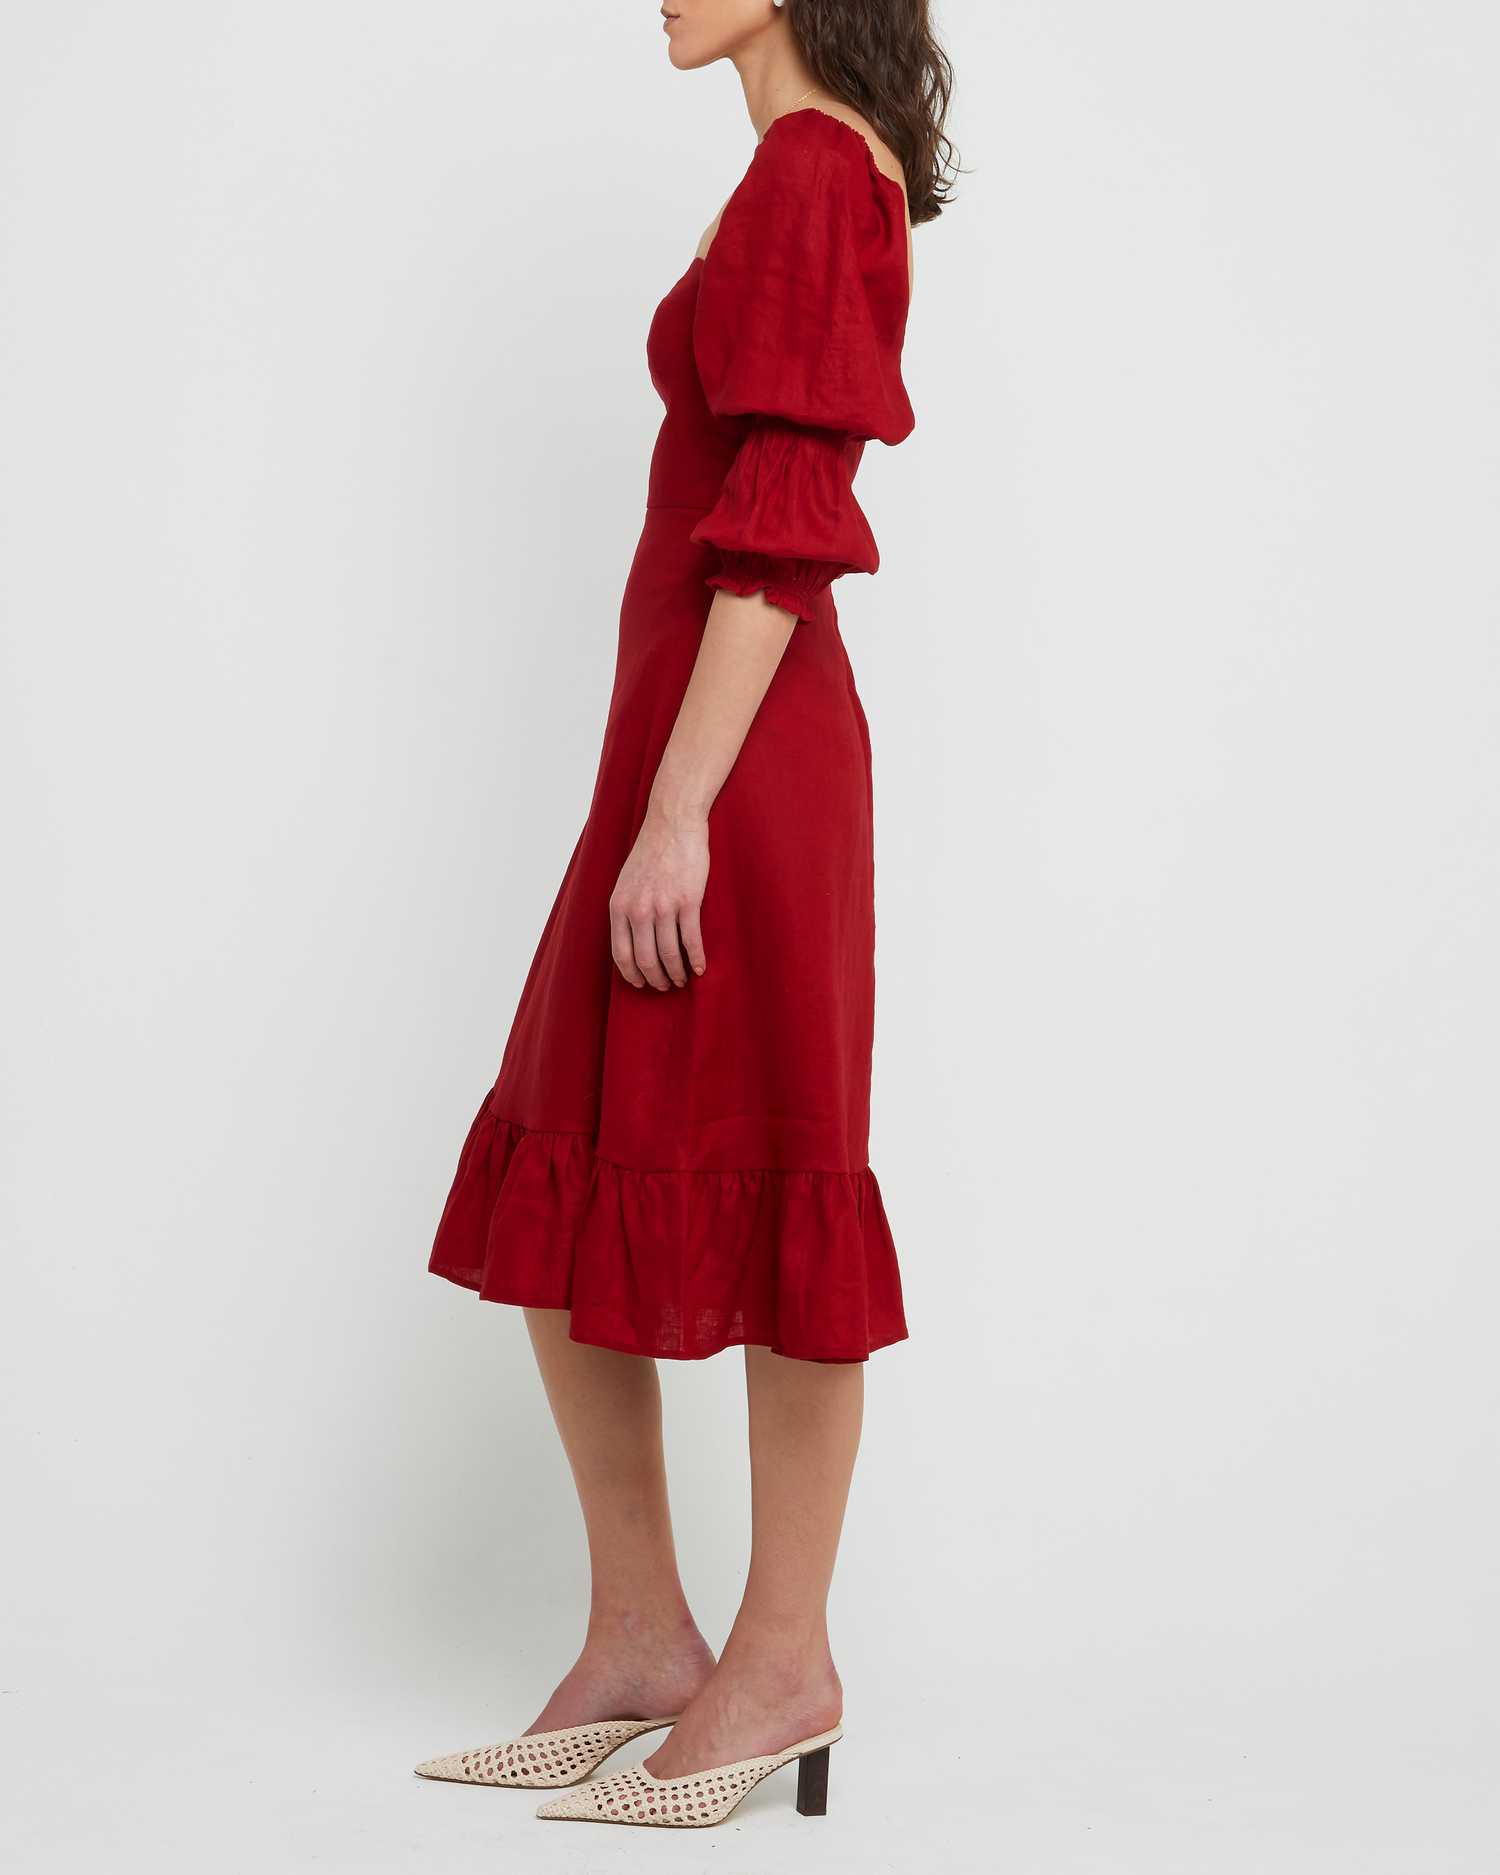 Third image of Kourtney Dress, a red midi dress, puff sleeves, romantic, sweetheart neckline, ruffle skirt